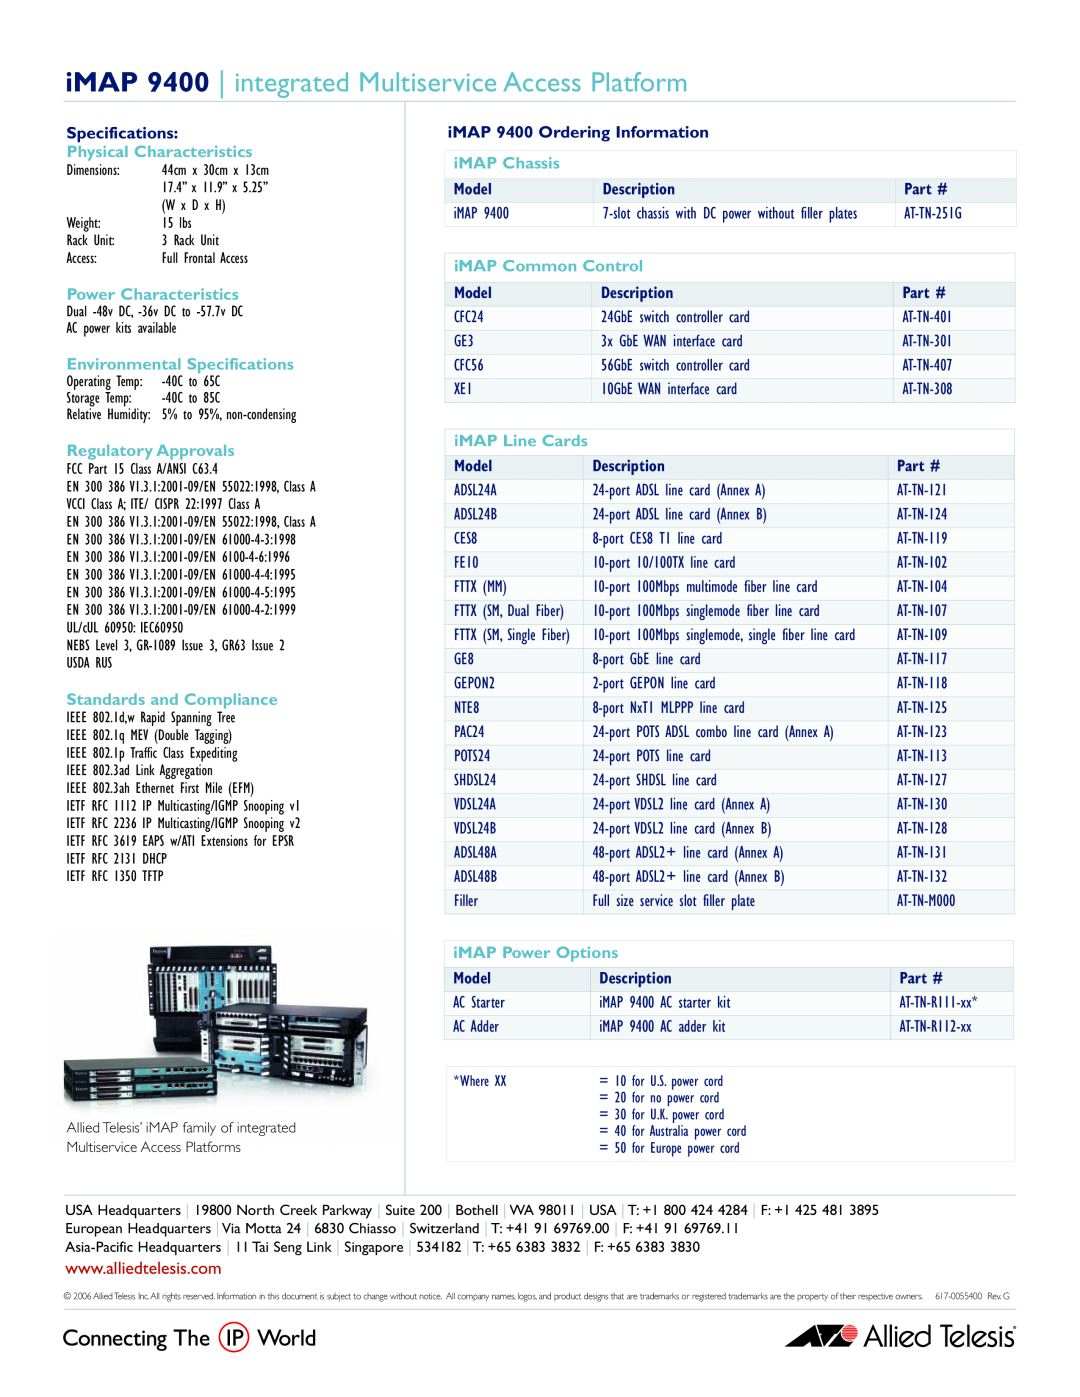 Allied Telesis manual iMAP 9400 integrated Multiservice Access Platform, Physical Characteristics, Power Characteristics 